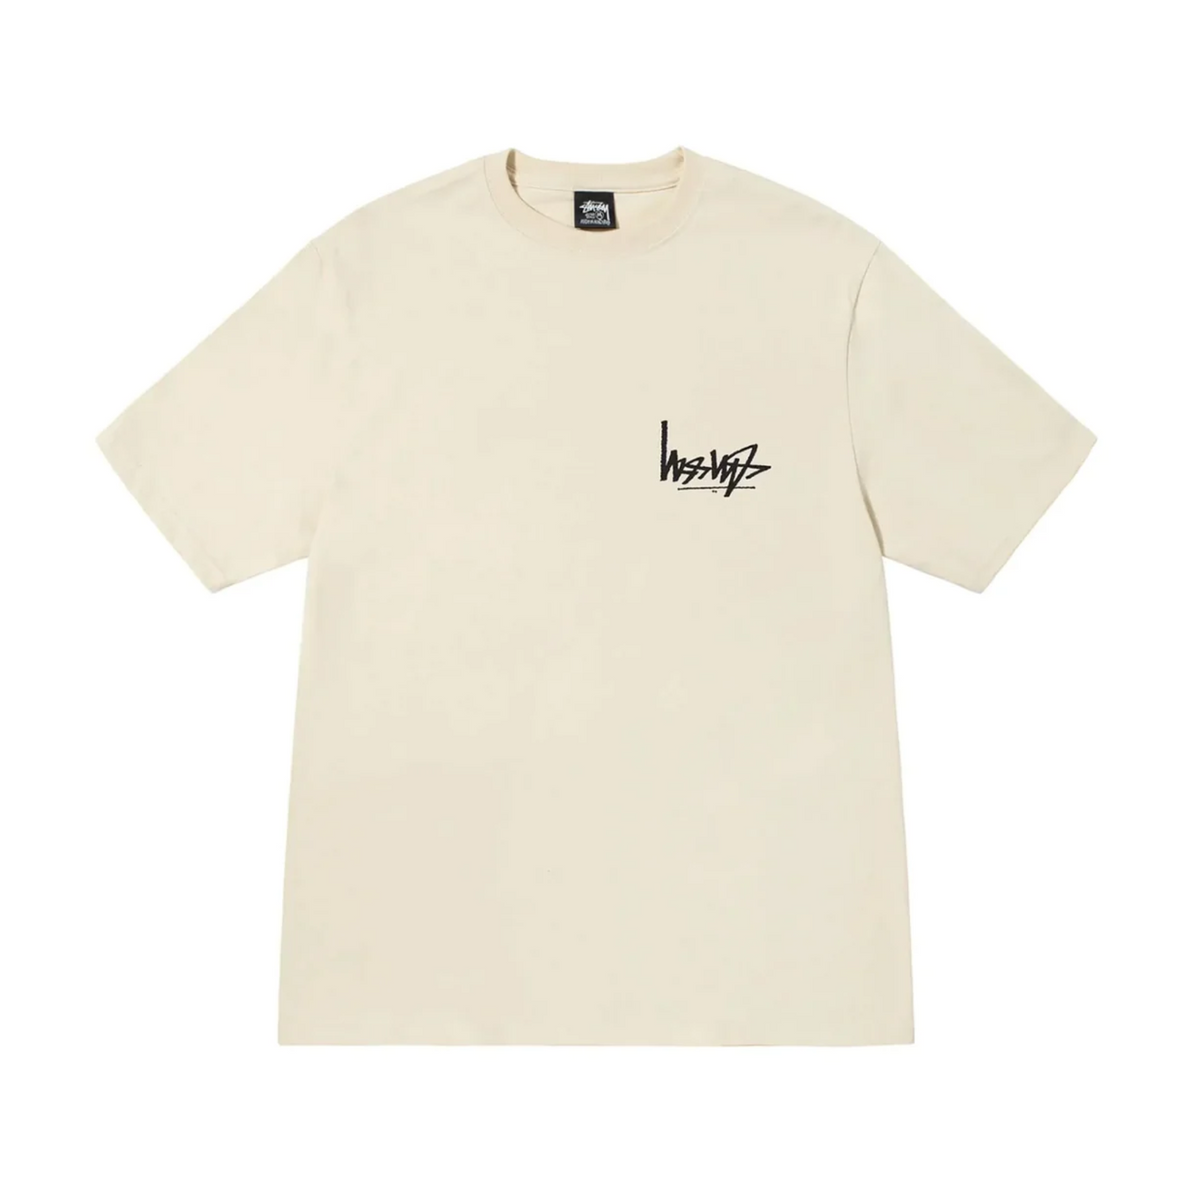 Stüssy Flipped t-shirt "Beige"